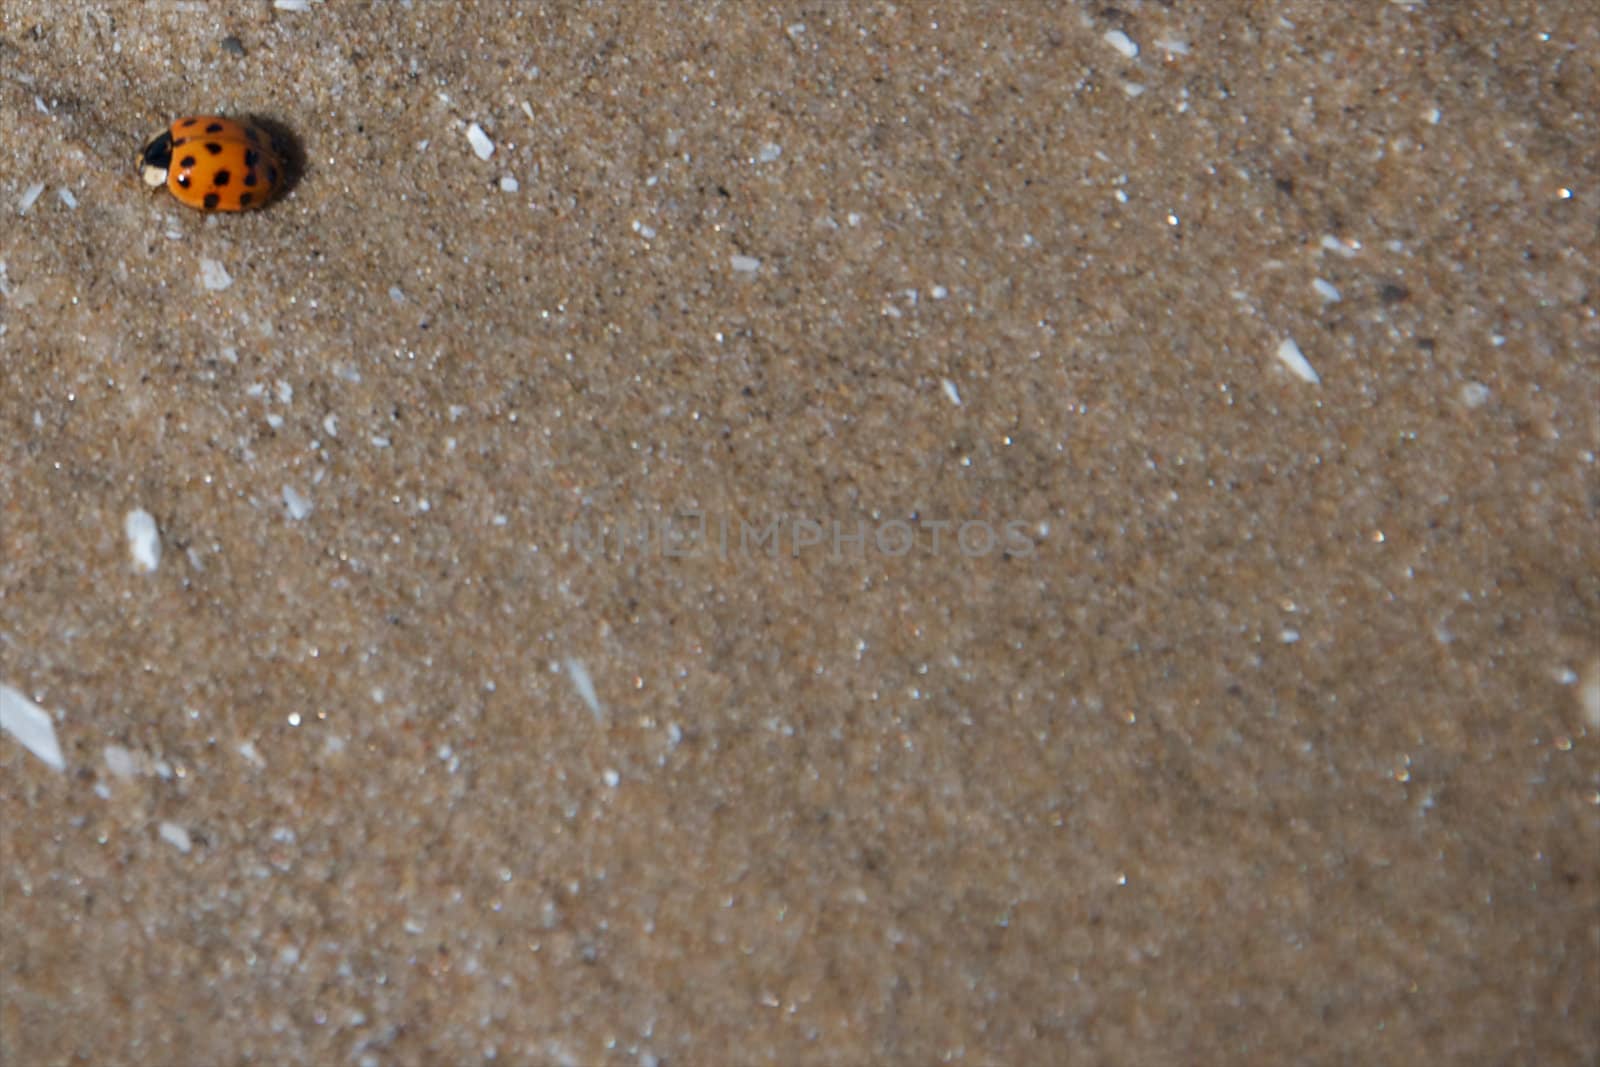 Ladybug on sand by tyroneburkemedia@gmail.com